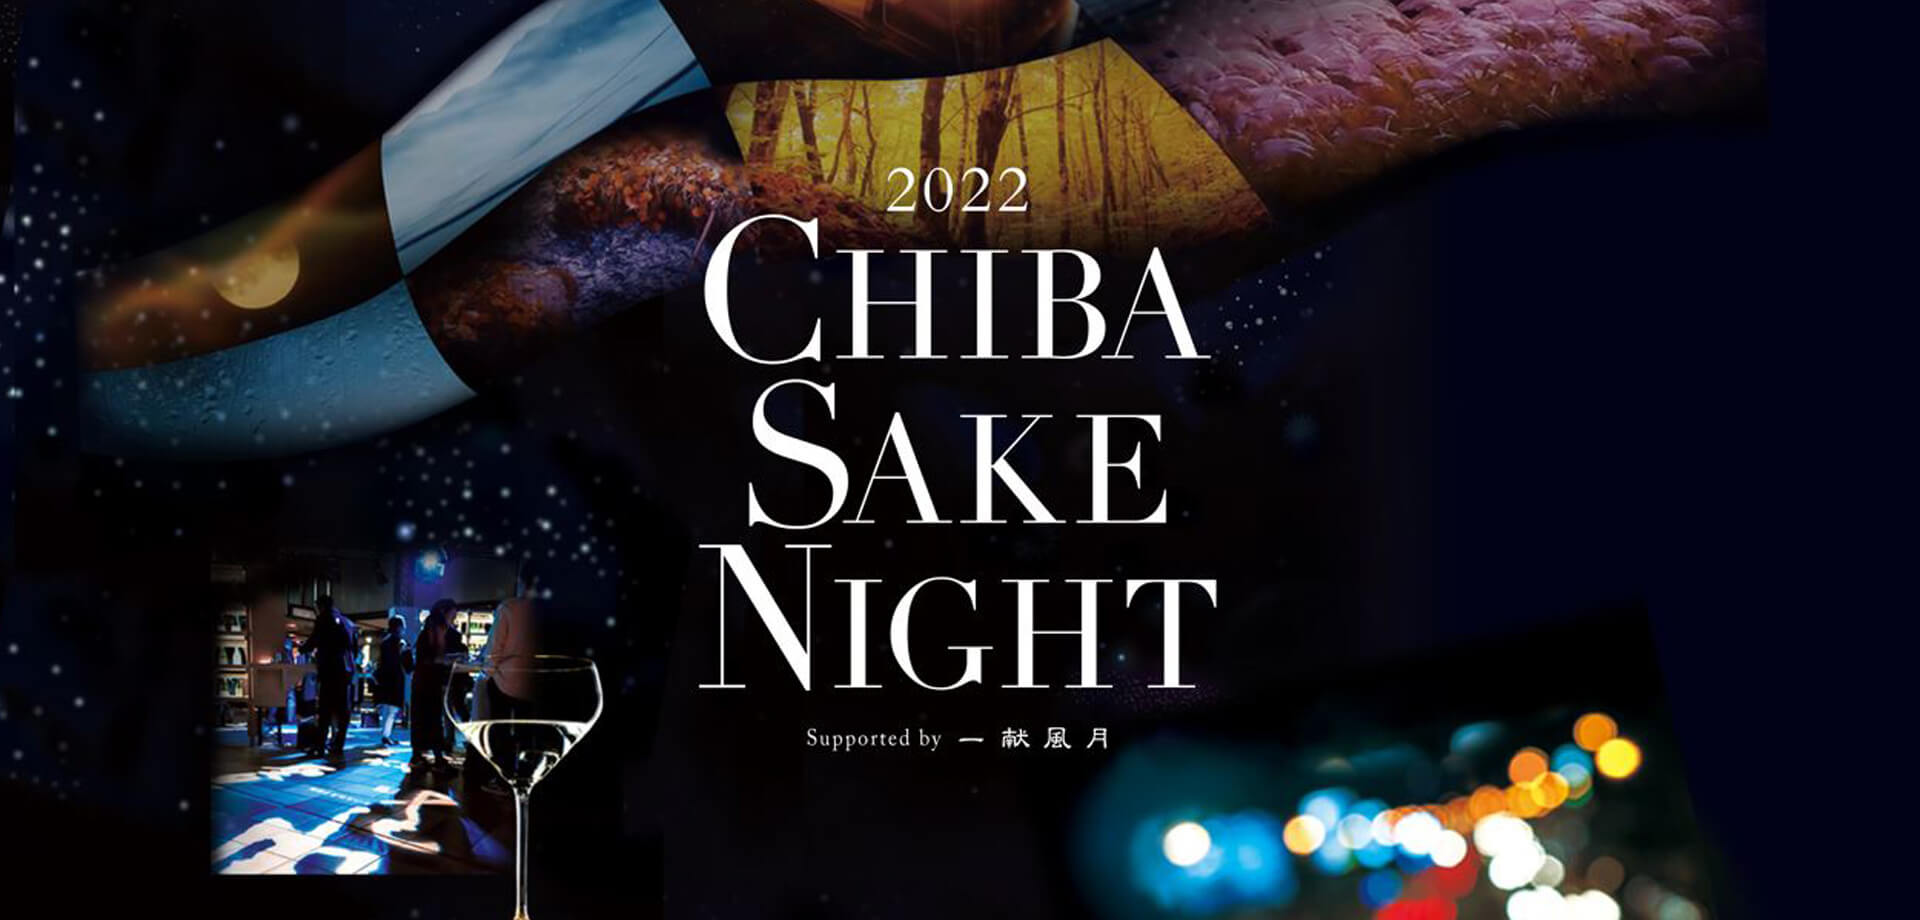 CHIBA SAKE NIGHT 2022 supported by 一献風月